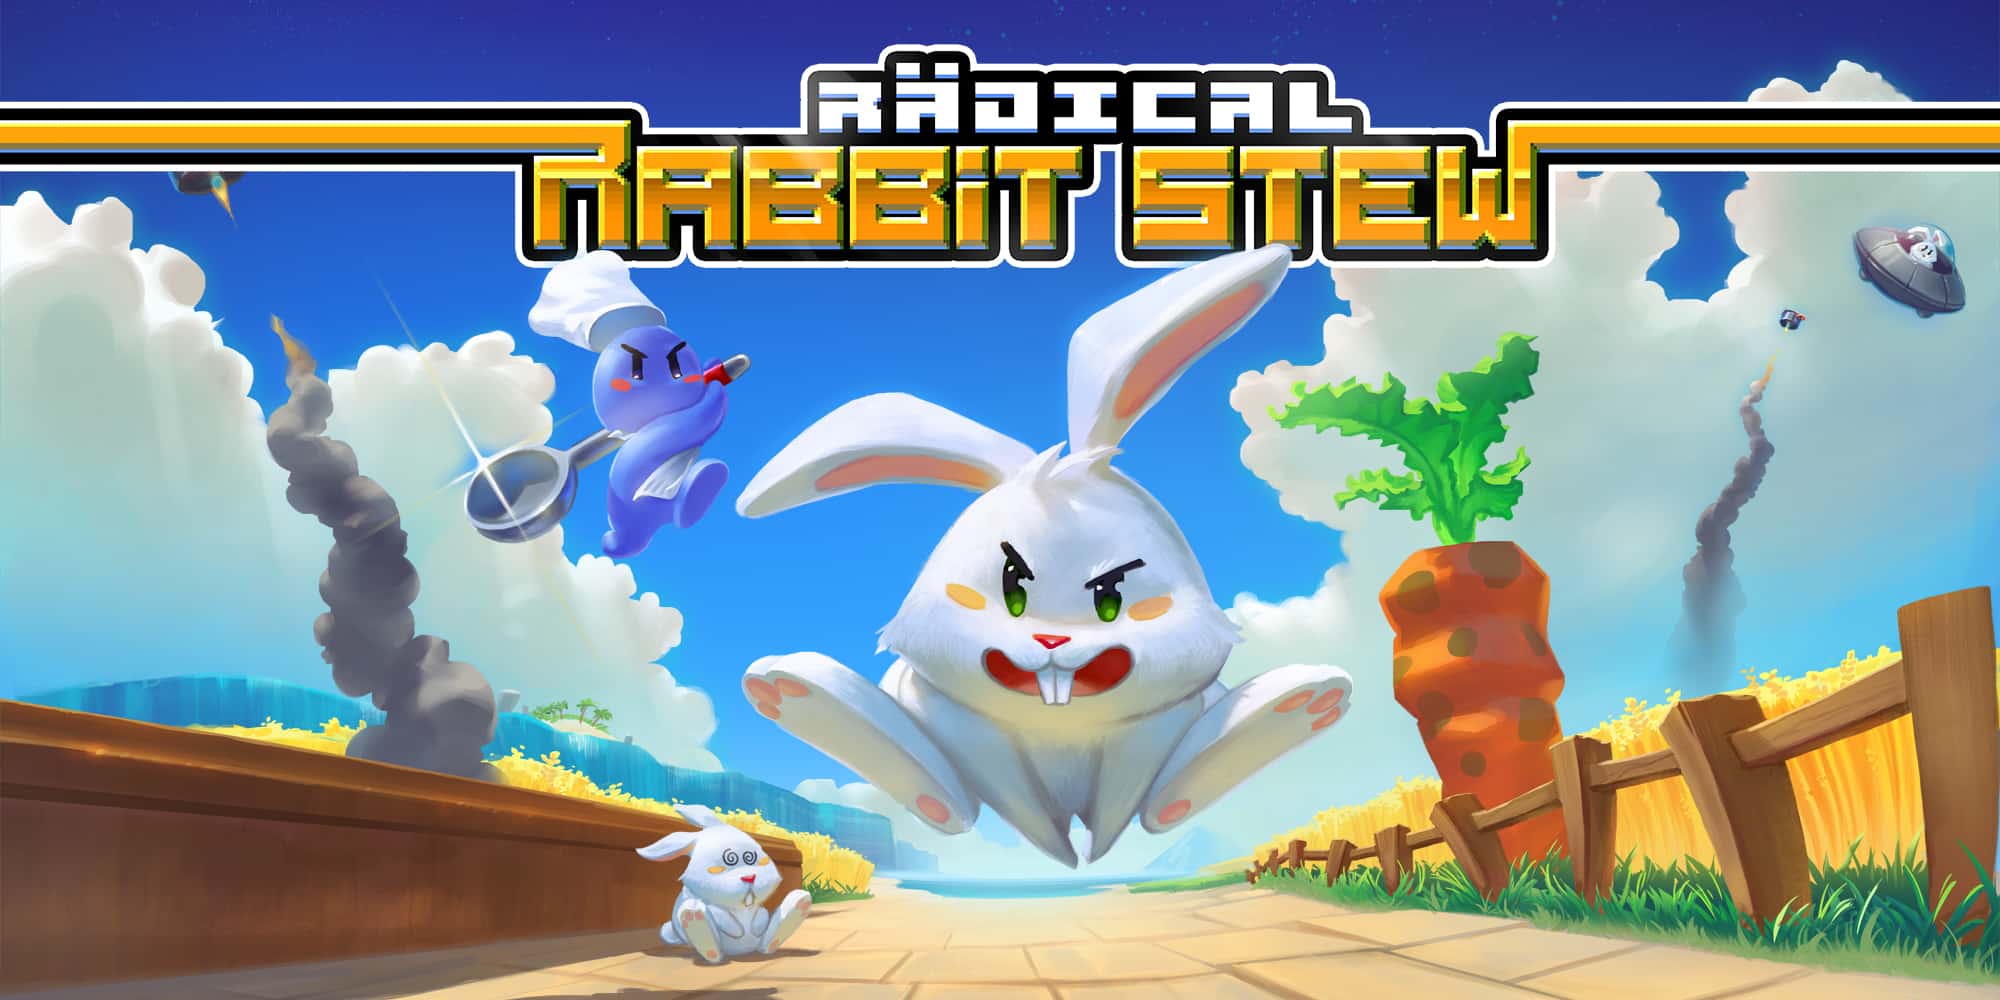 Radical Rabbit Stew scontato del 50% su Instant Gaming 2